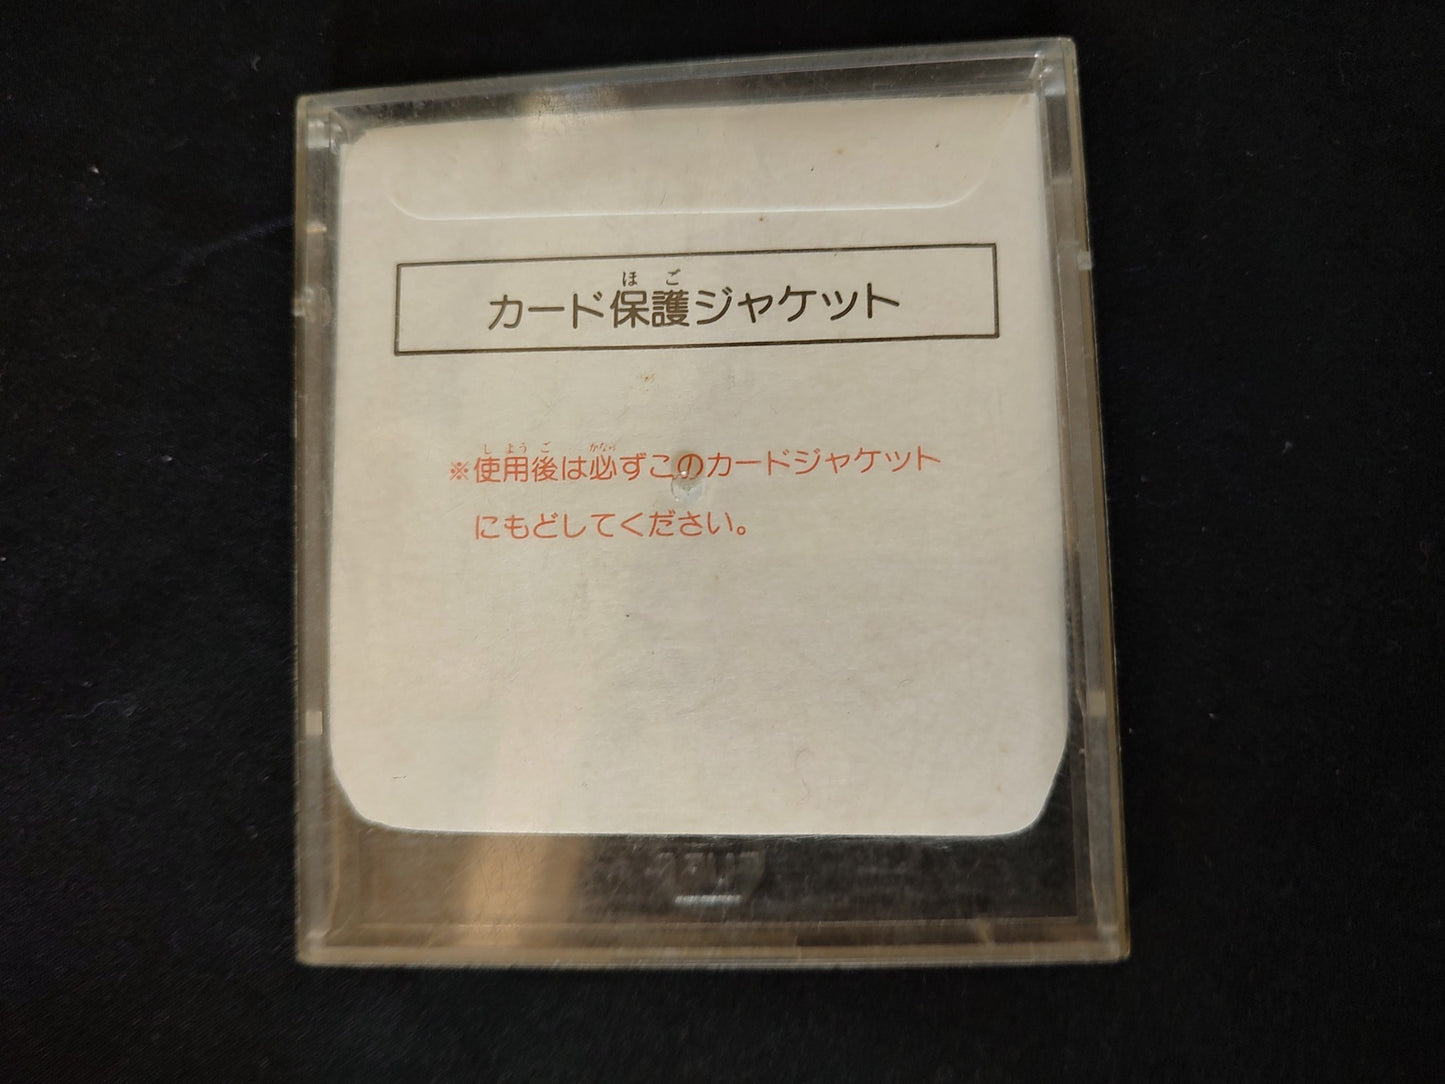 Gun Smoke FAMICOM (NES) Disk System, Game disk set, tested-f0515-